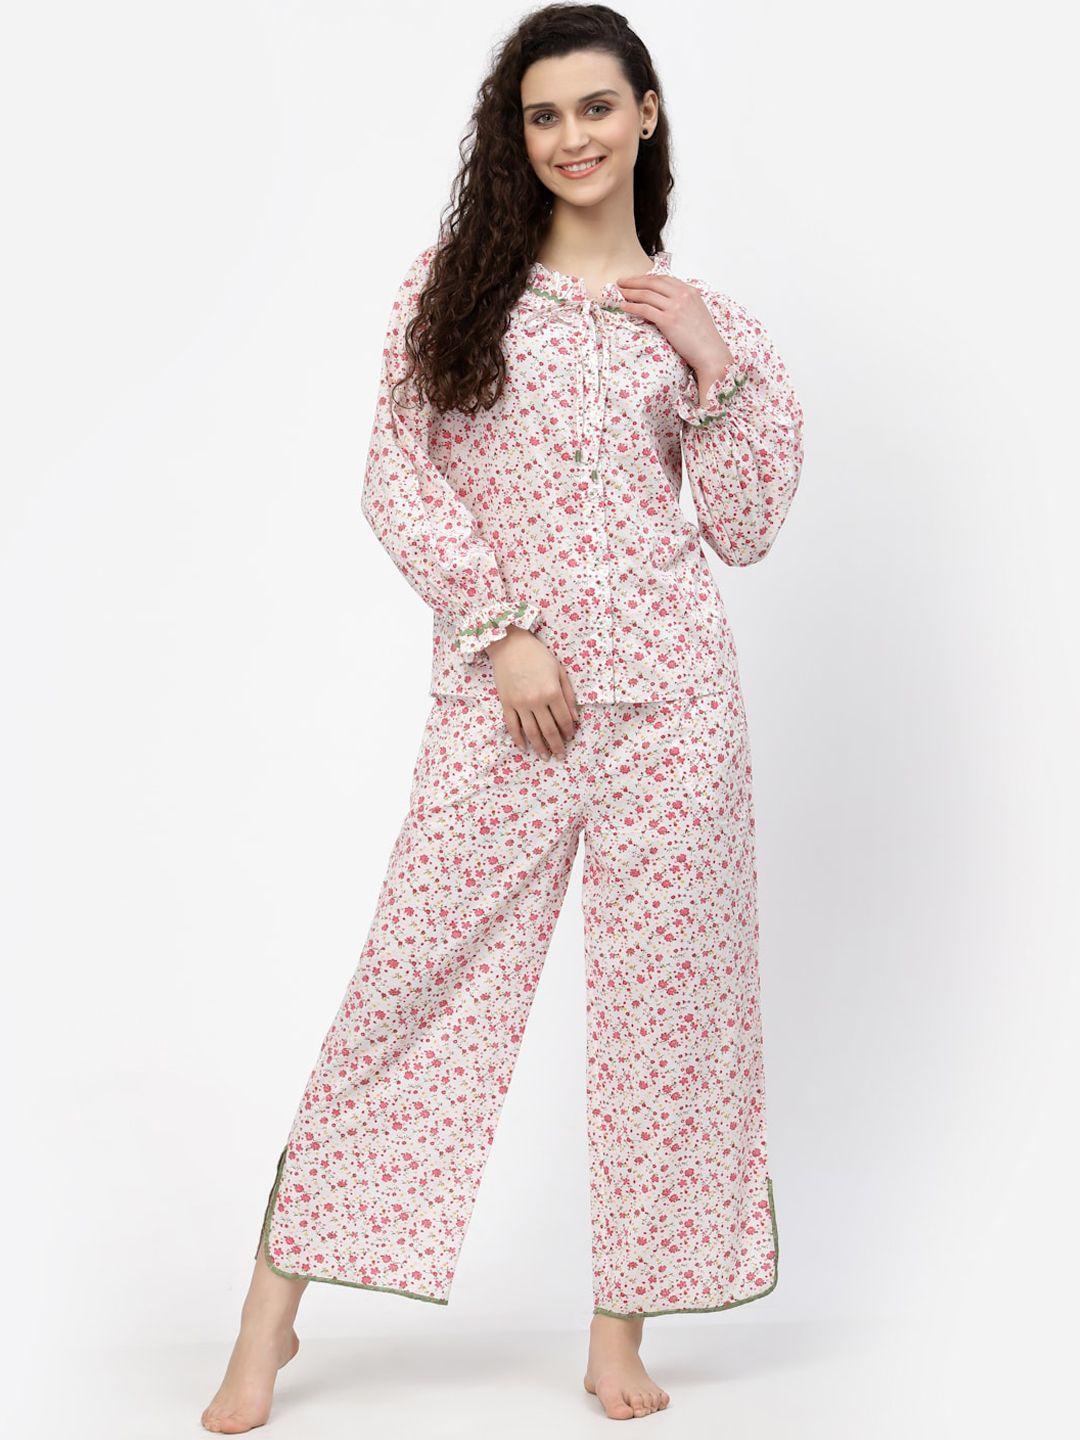 blanc9 women white & pink printed pure cotton night suit